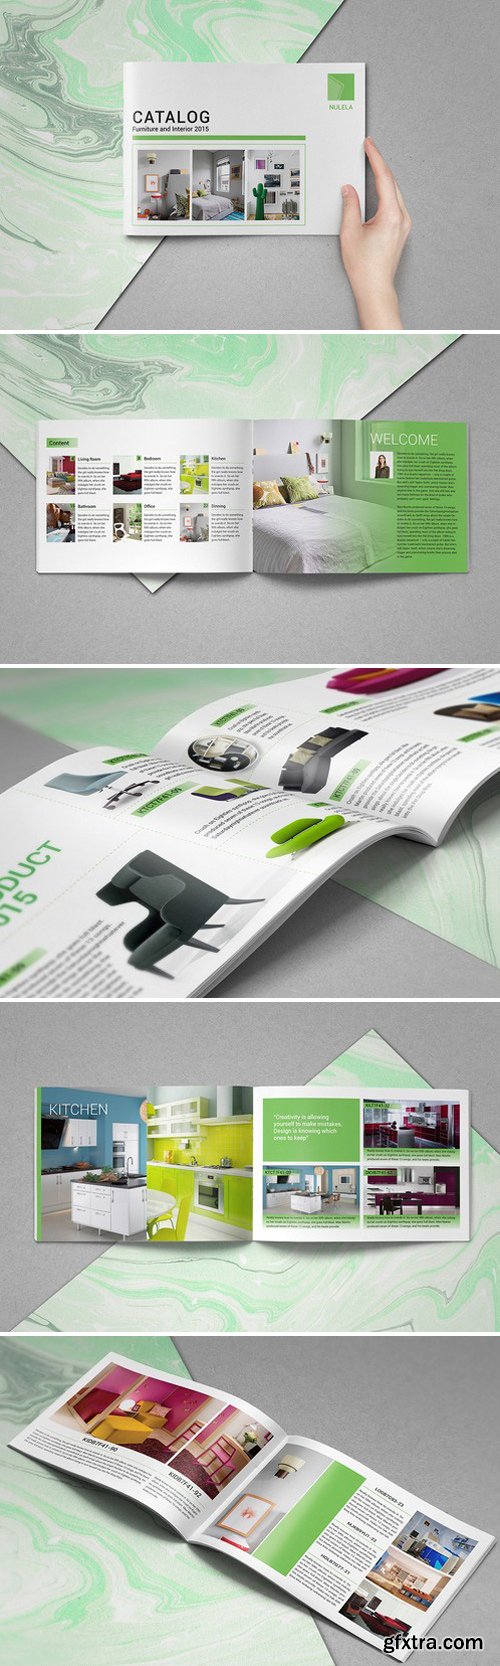 CM - Interior Product Catalogs/Brochure 2225487